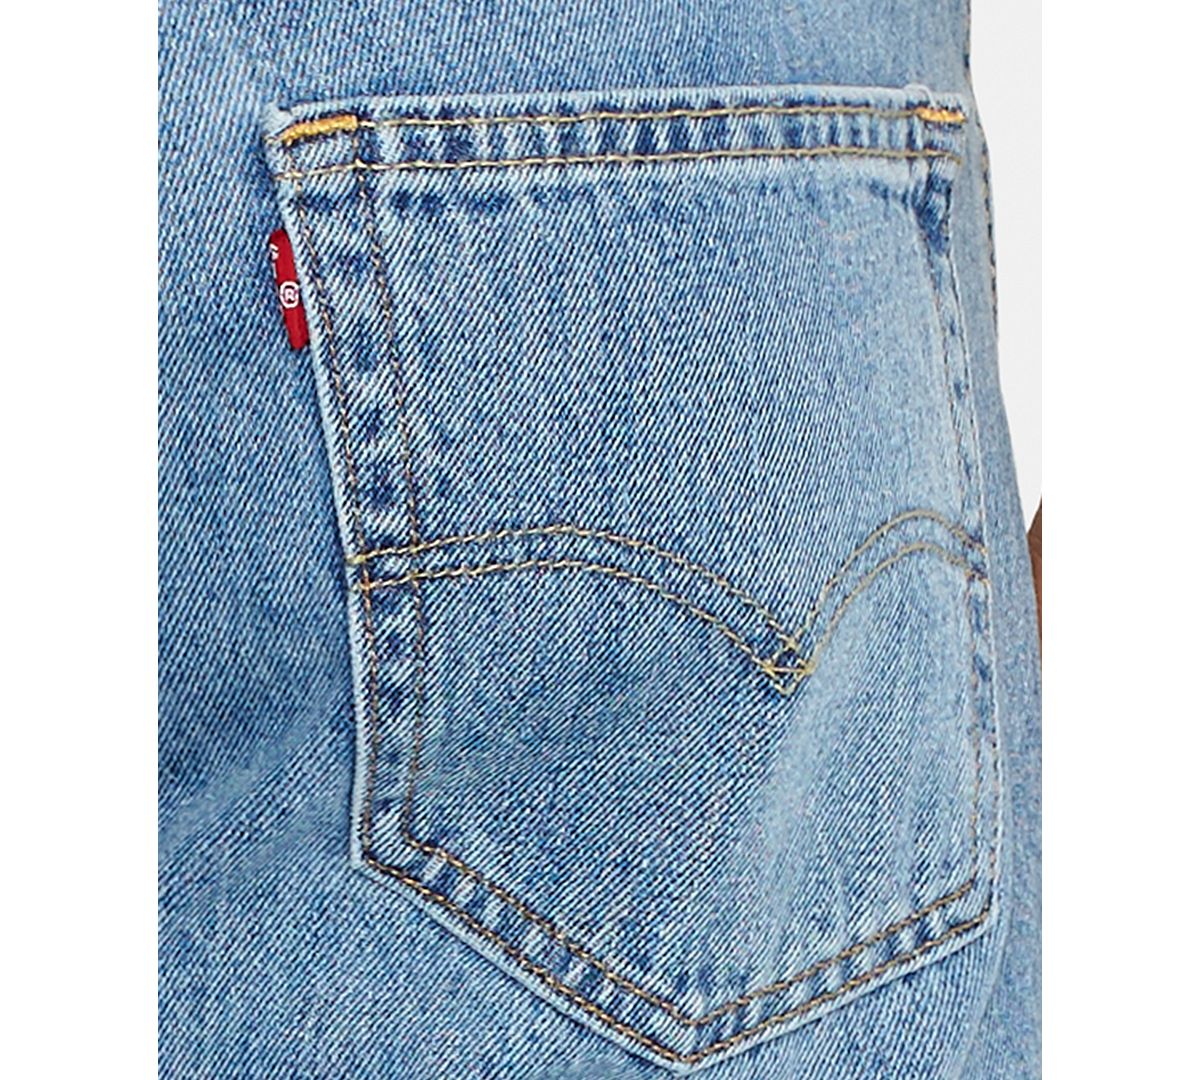 Levi's 505 Regular-fit Non-stretch Jeans Light Stonewash